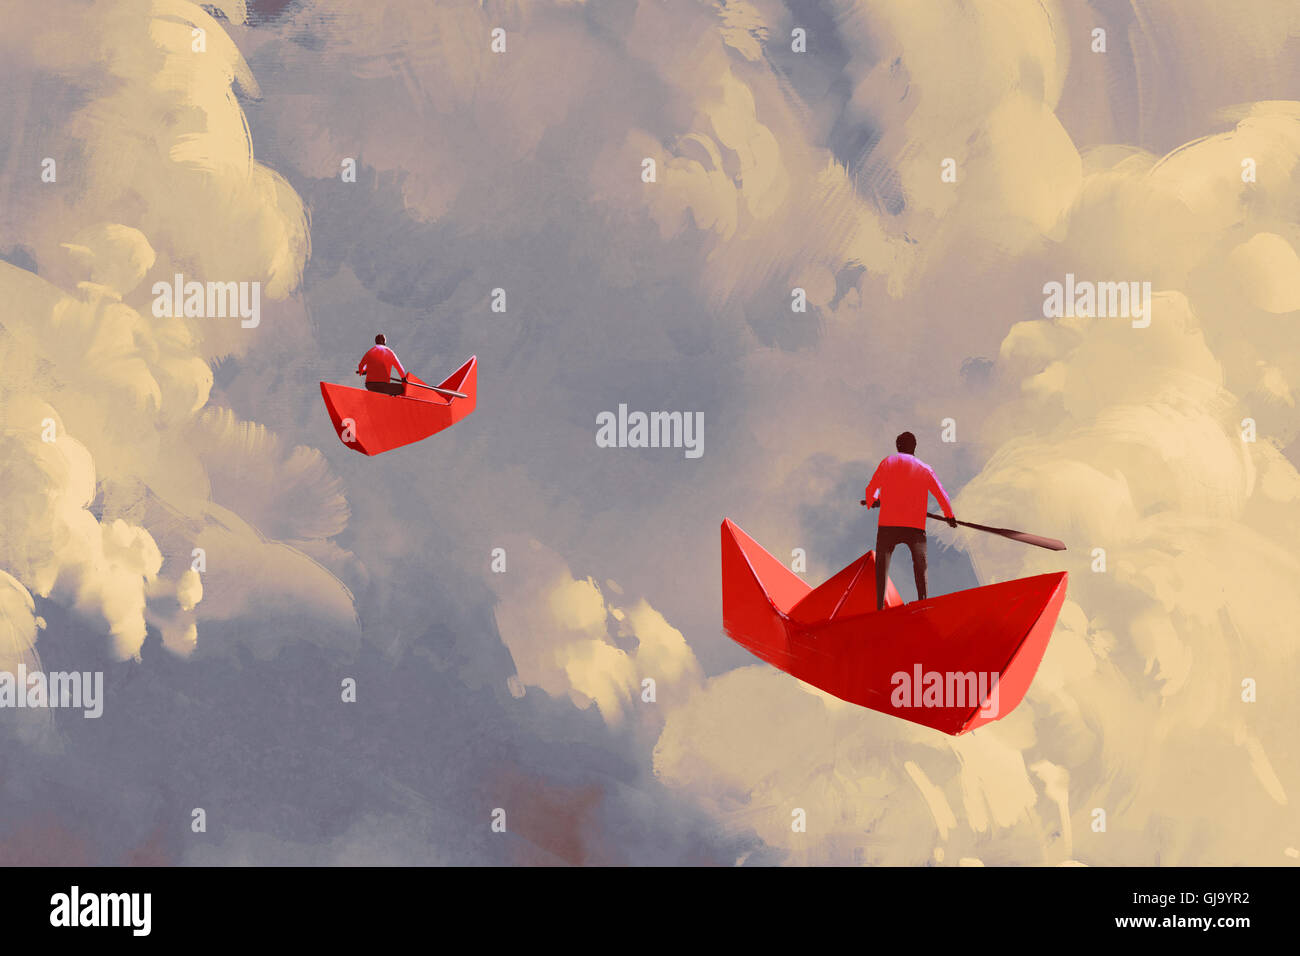 Männer auf roten Origami Papier Boote unterwegs in den bewölkten Himmel, Illustration, Malerei Stockfoto